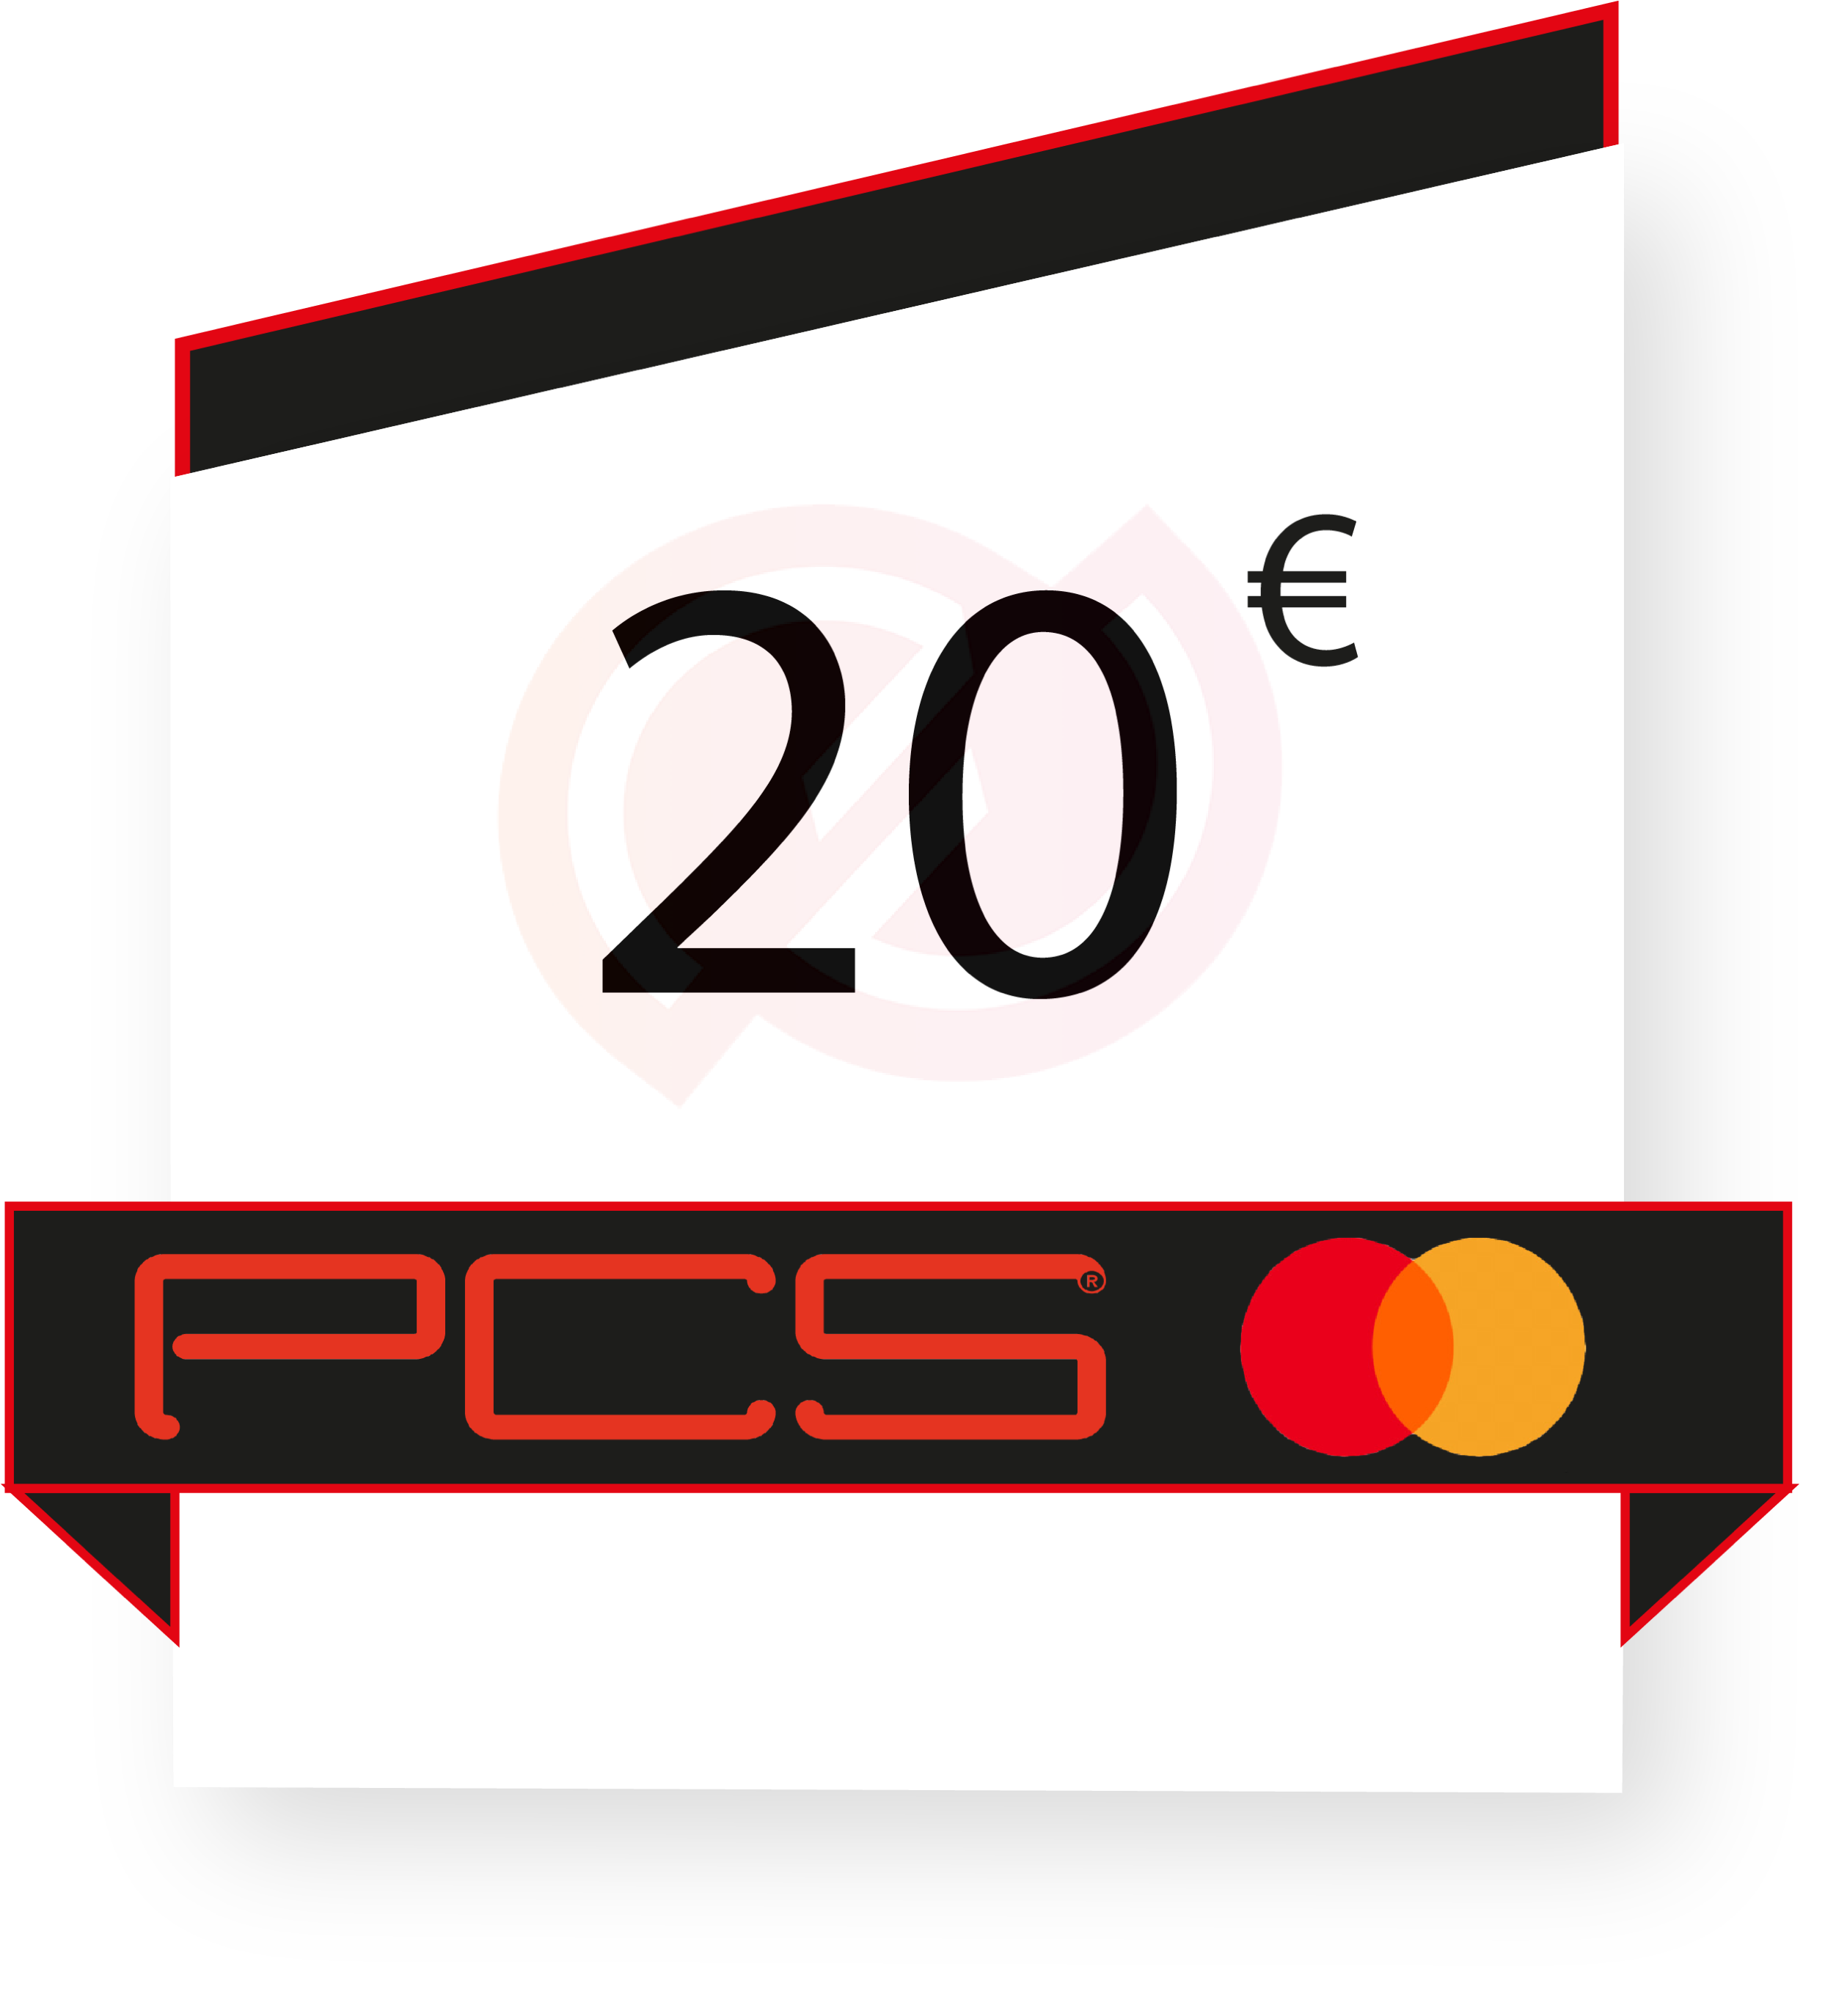 PCS 20€